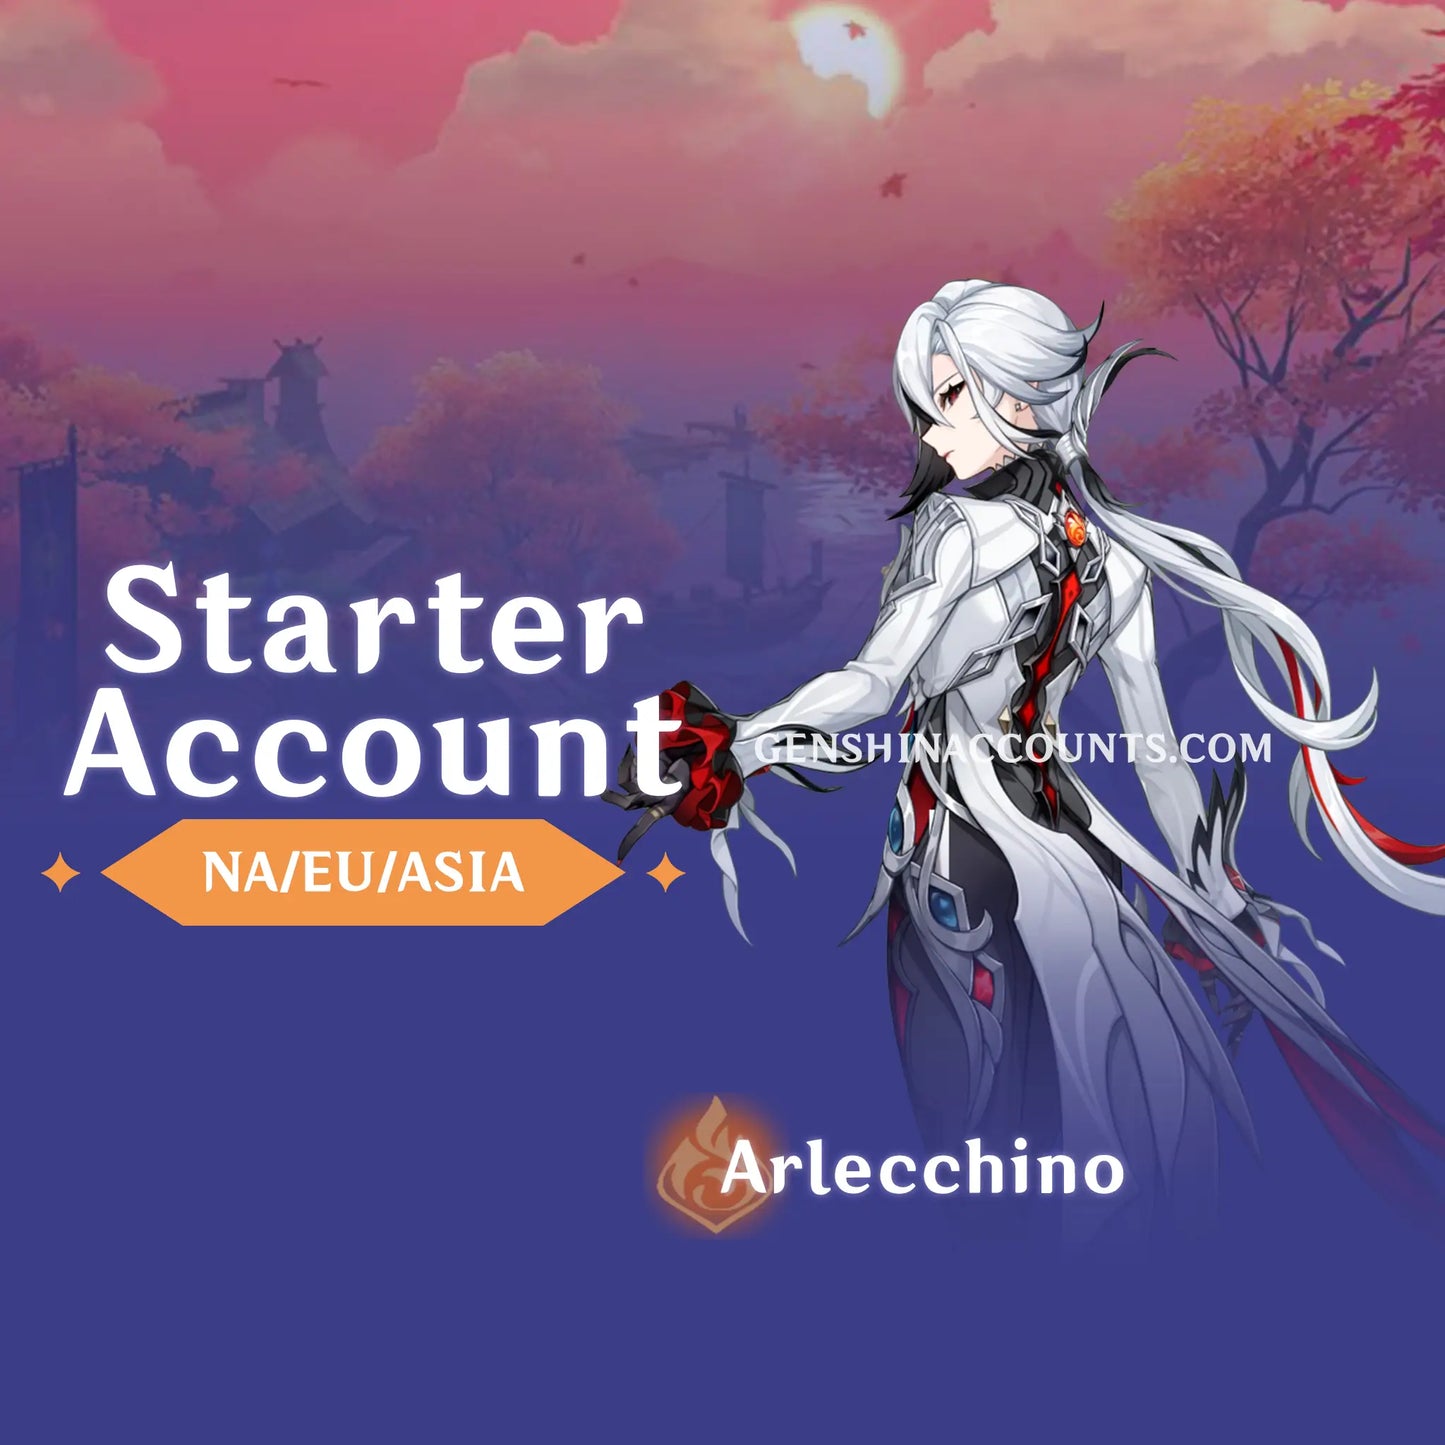 Arlecchino - AR10 Genshin Impact Starter Account